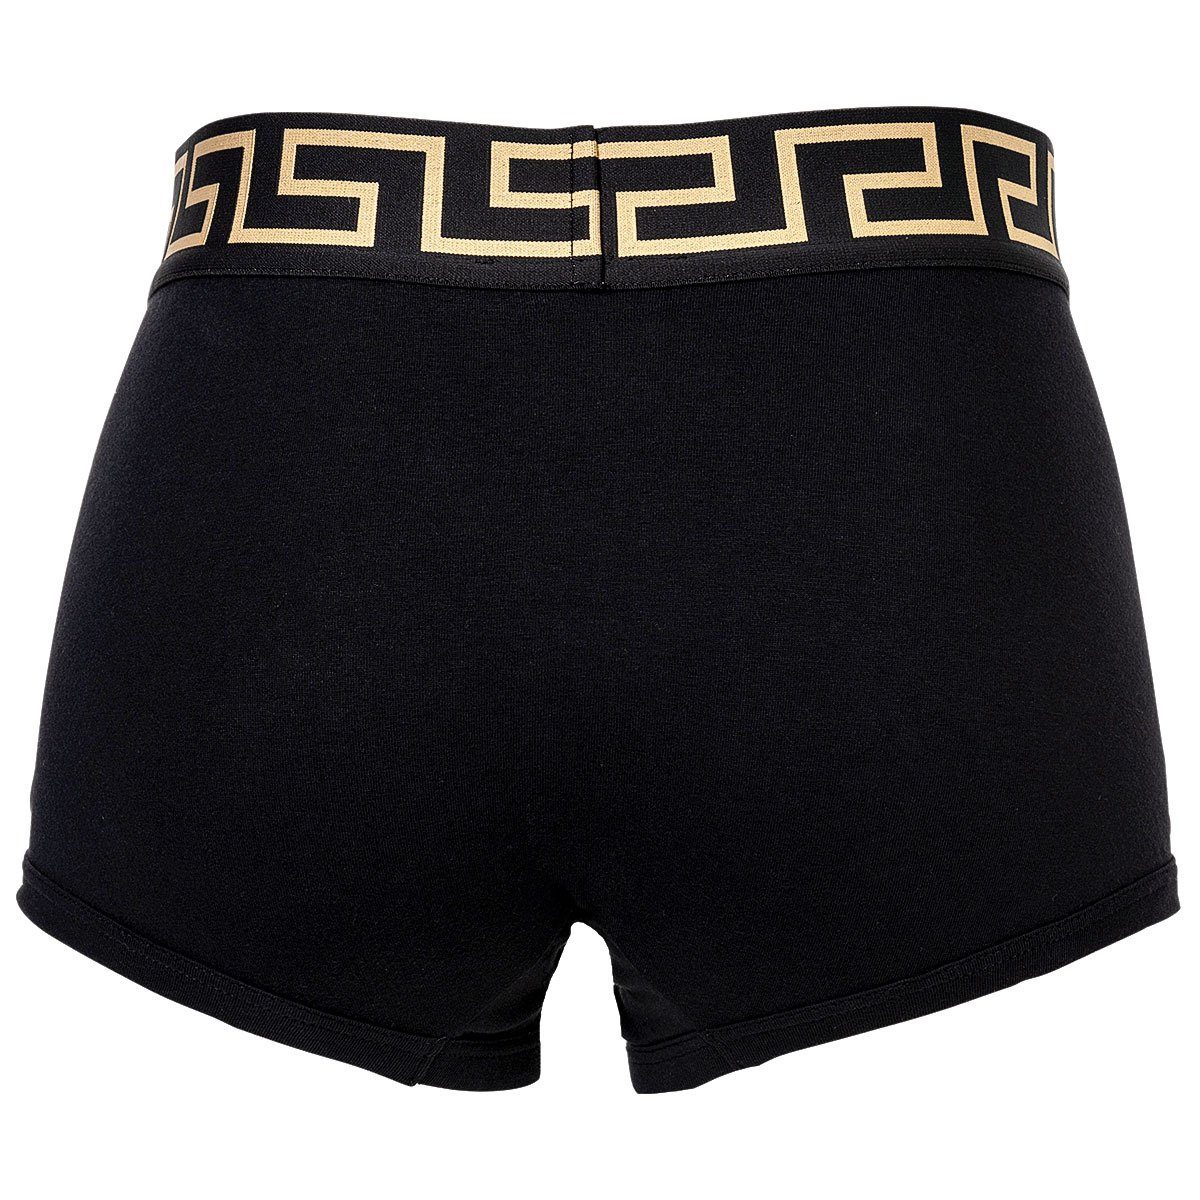 Versace Boxer Trunk Shorts, Schwarz/Grau - Pack 2er Herren Boxer